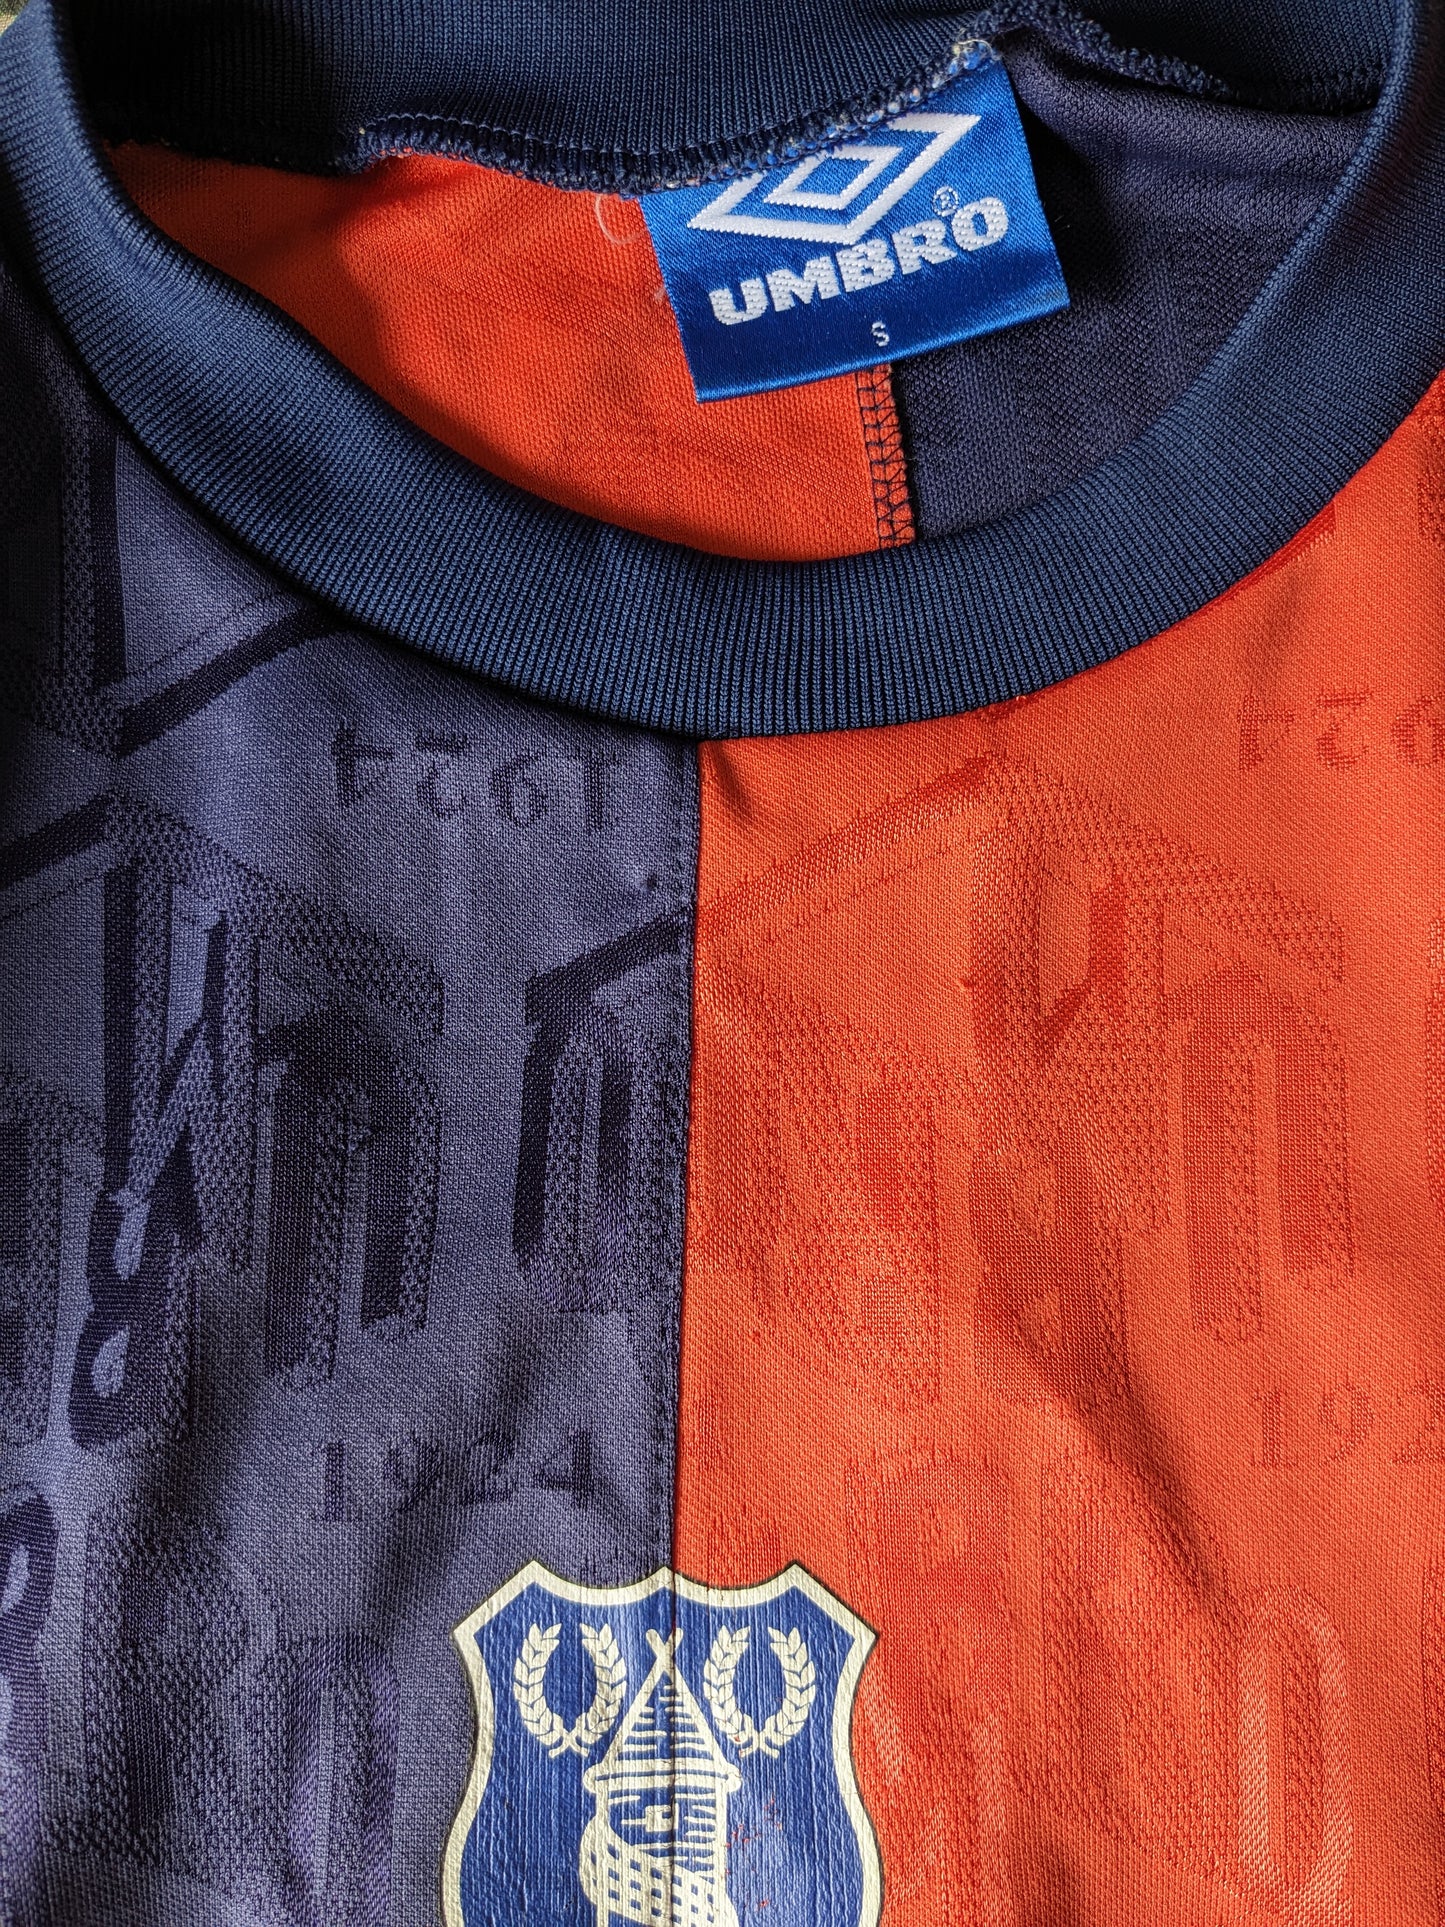 Vintage orgineel Umbro '92-94 Everton sport training shirt. Blauw Oranje gekleurd. Maat S / M.